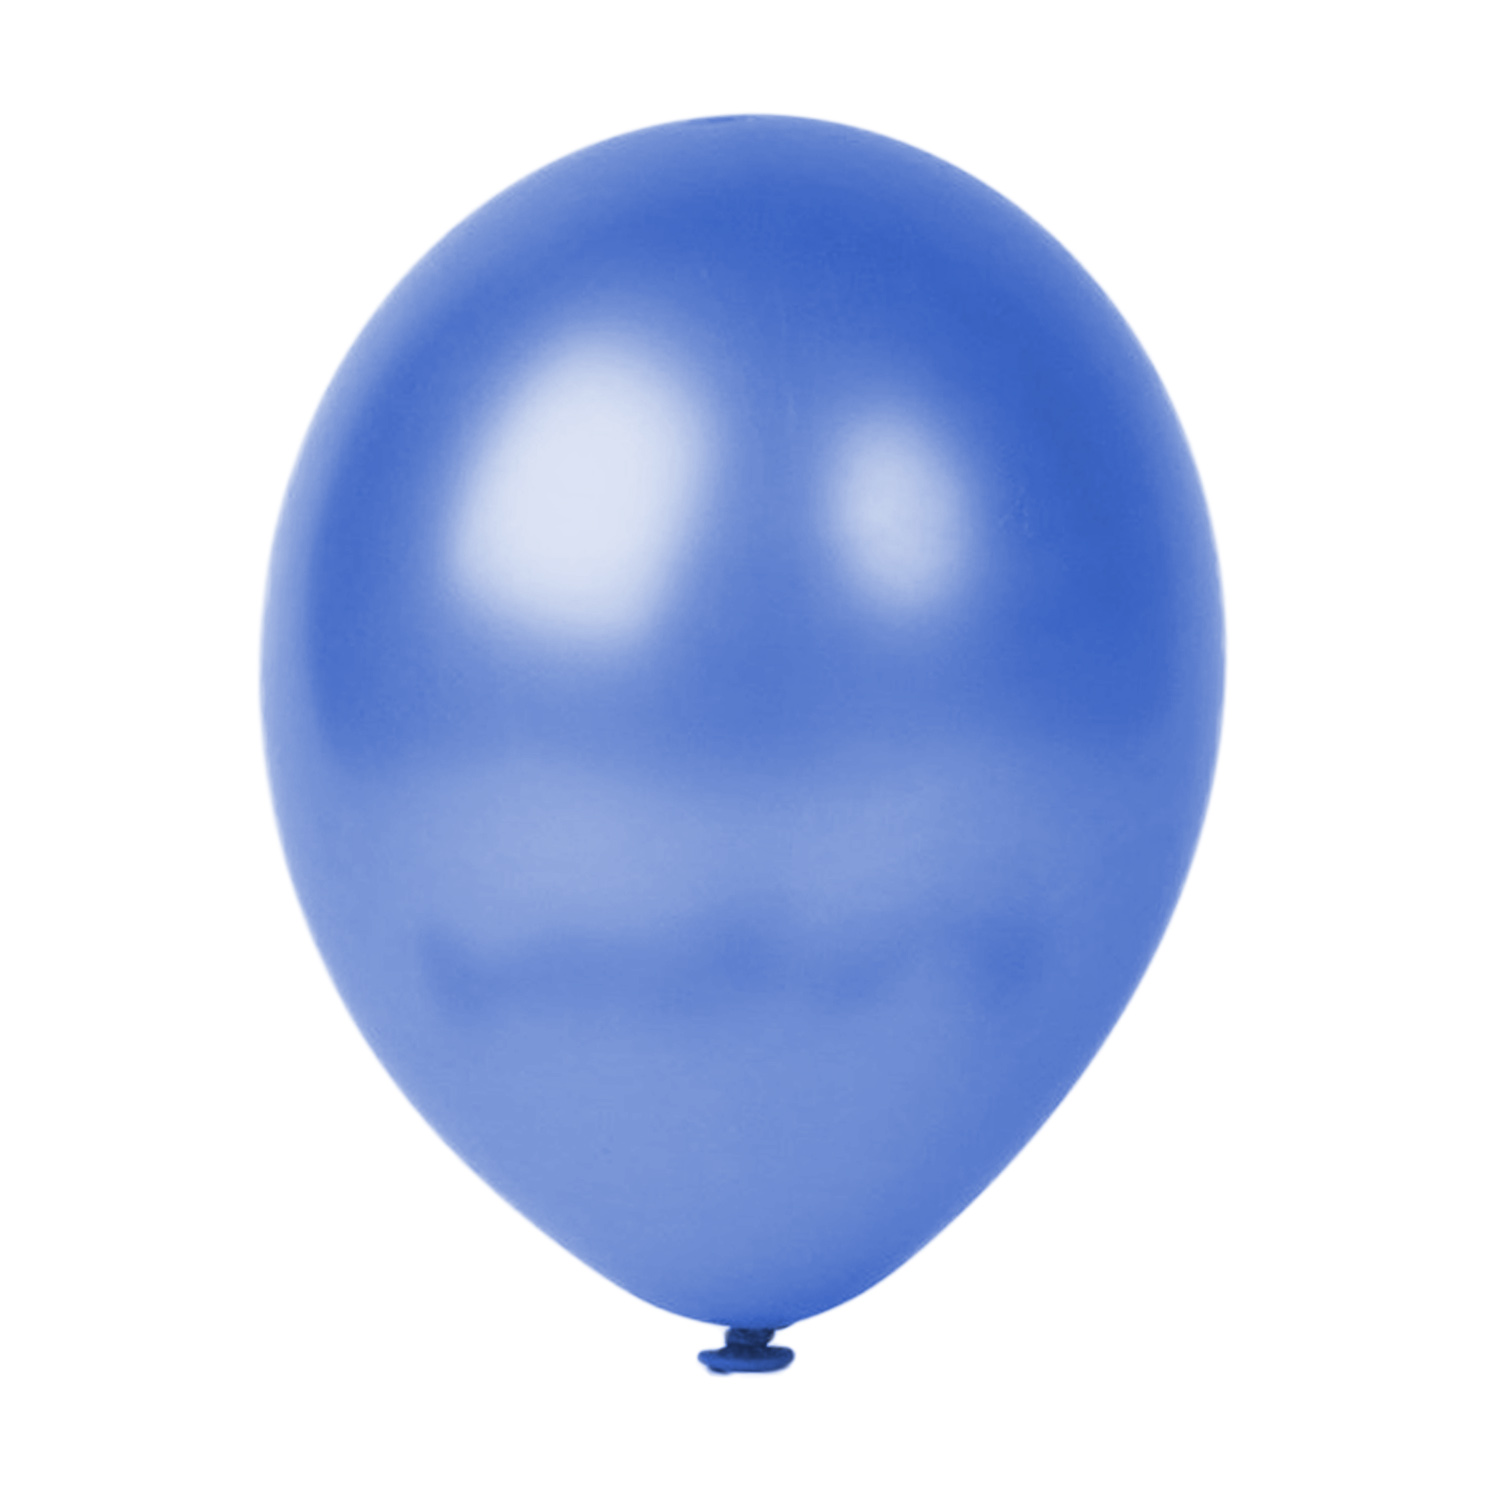 50 Luftballons Metallic bordeaux bordo  30cm Nr.441 3989/2 